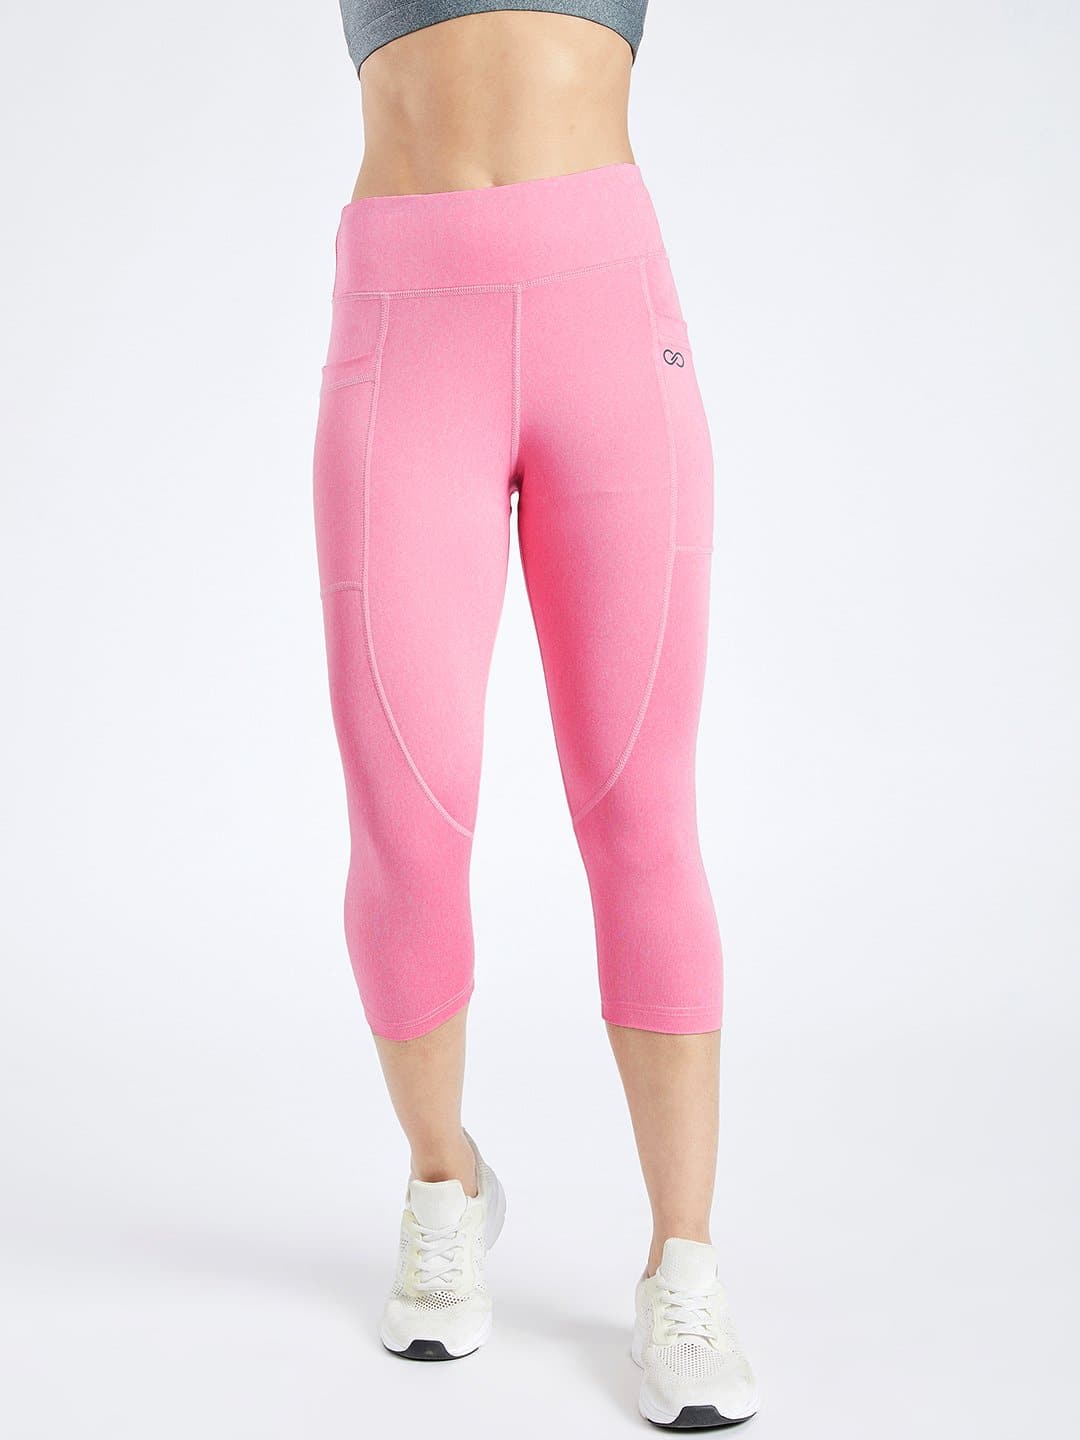 Maxtreme Power Me Pink Marl Pocket Women's Capri Leggings